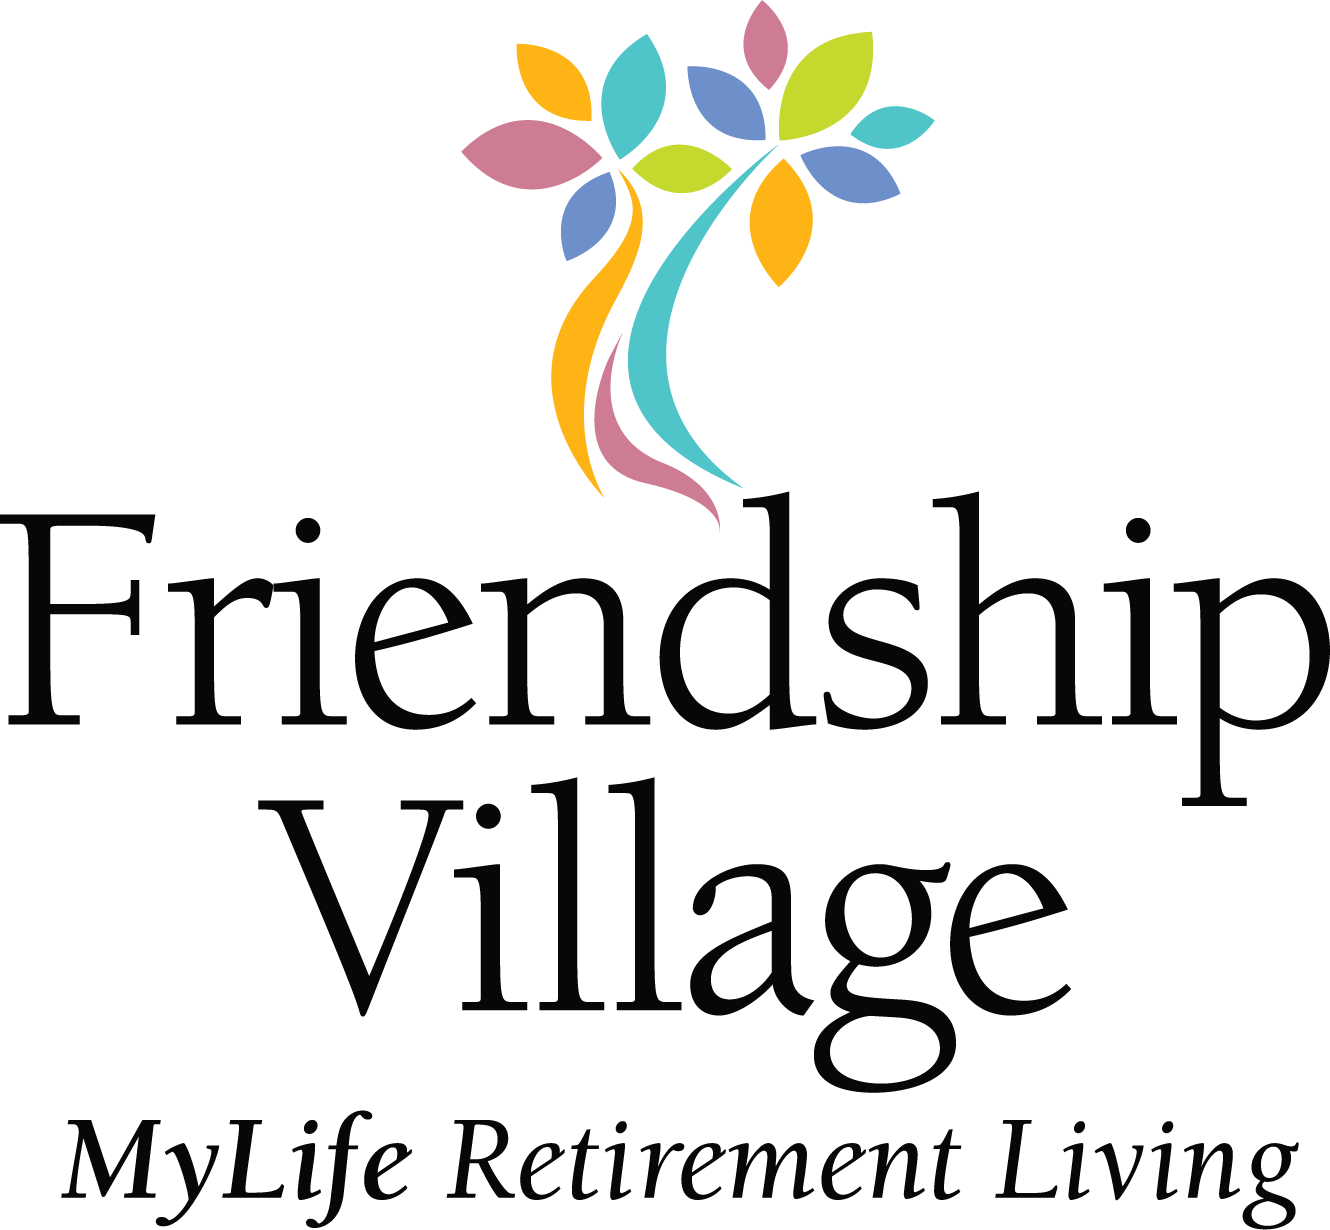 Friendship Village Retirement Community